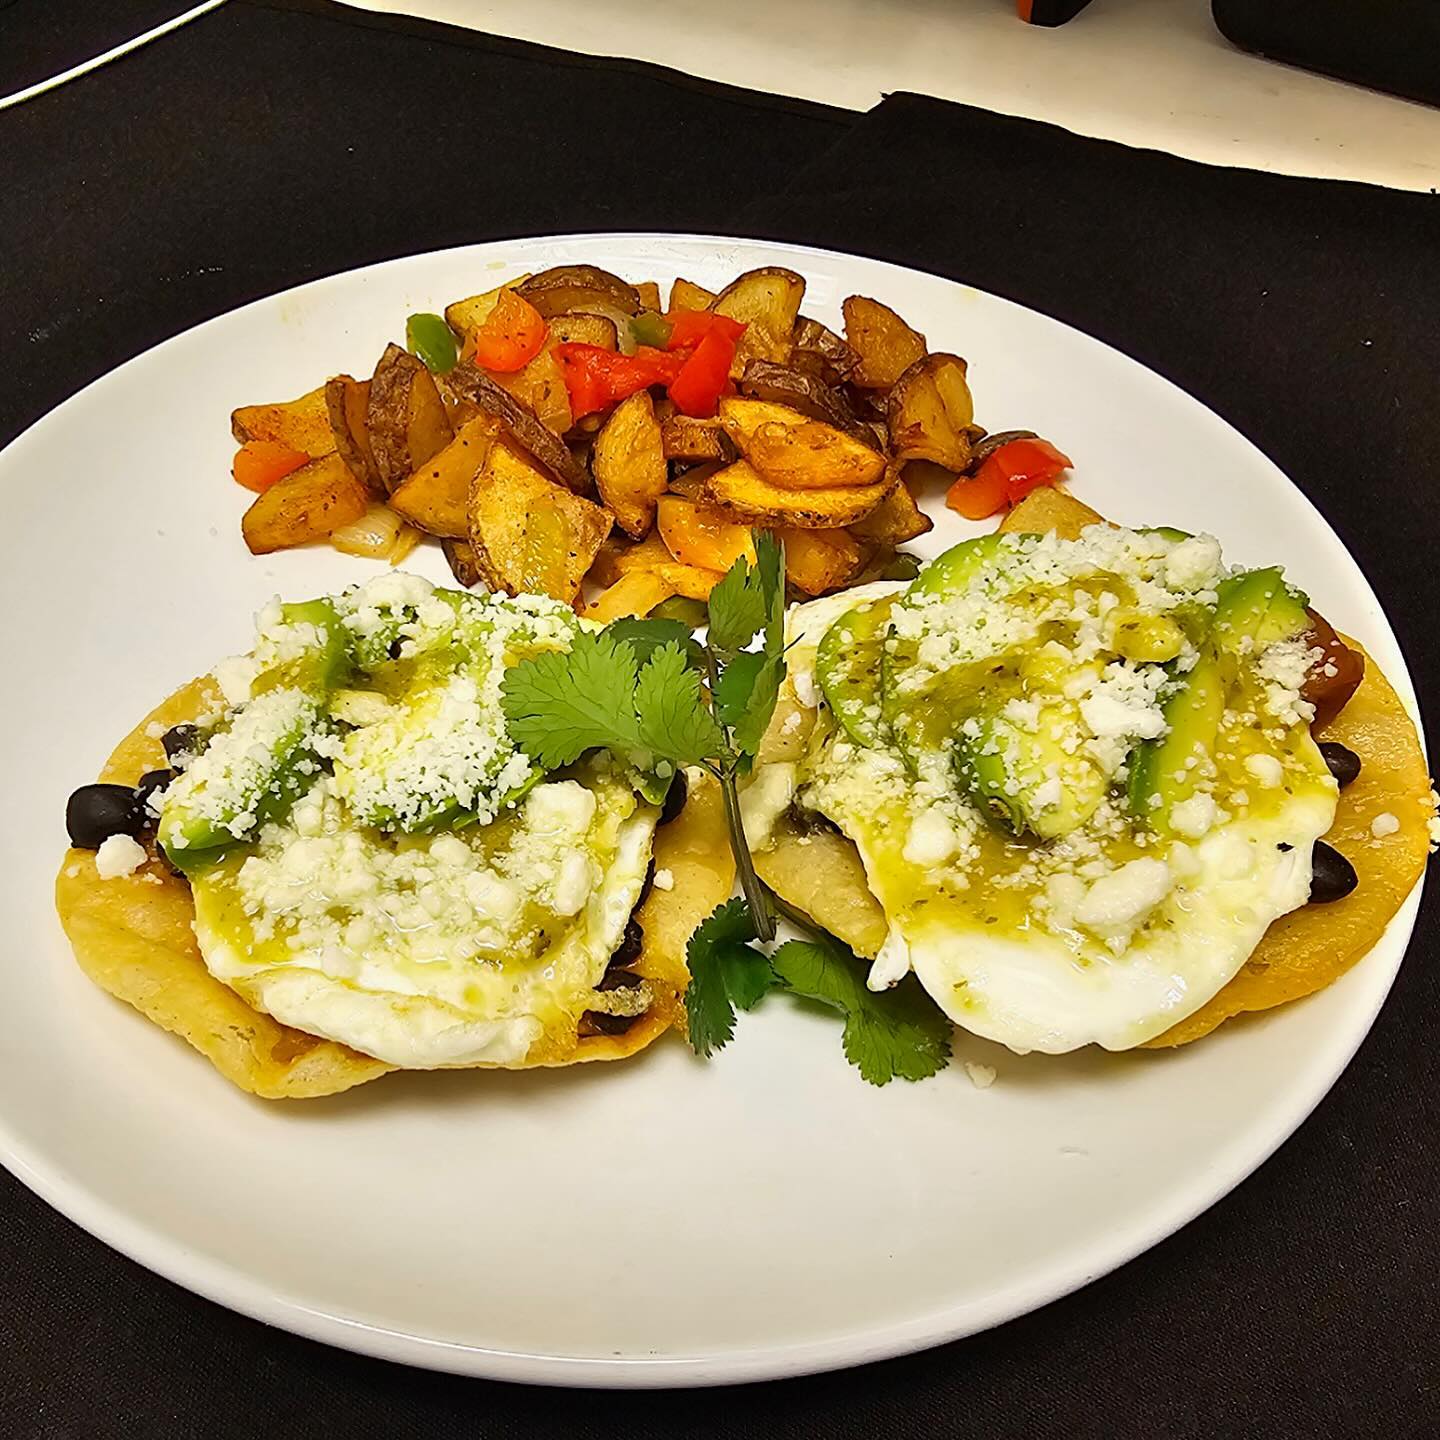 Breakfast eggs on corn tortillas with avocado and tomatillo sauce